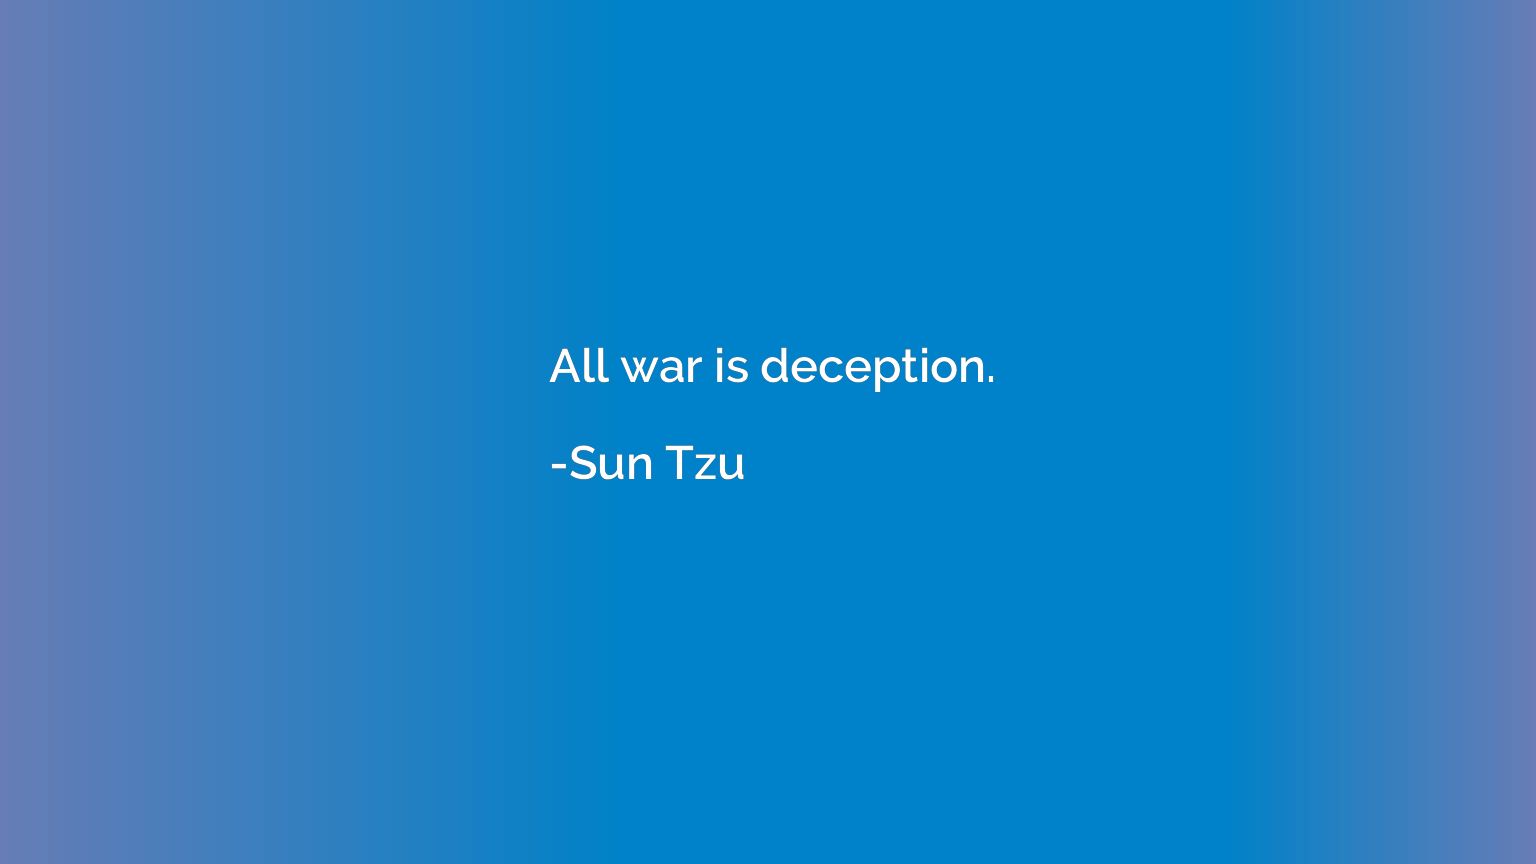 All war is deception.